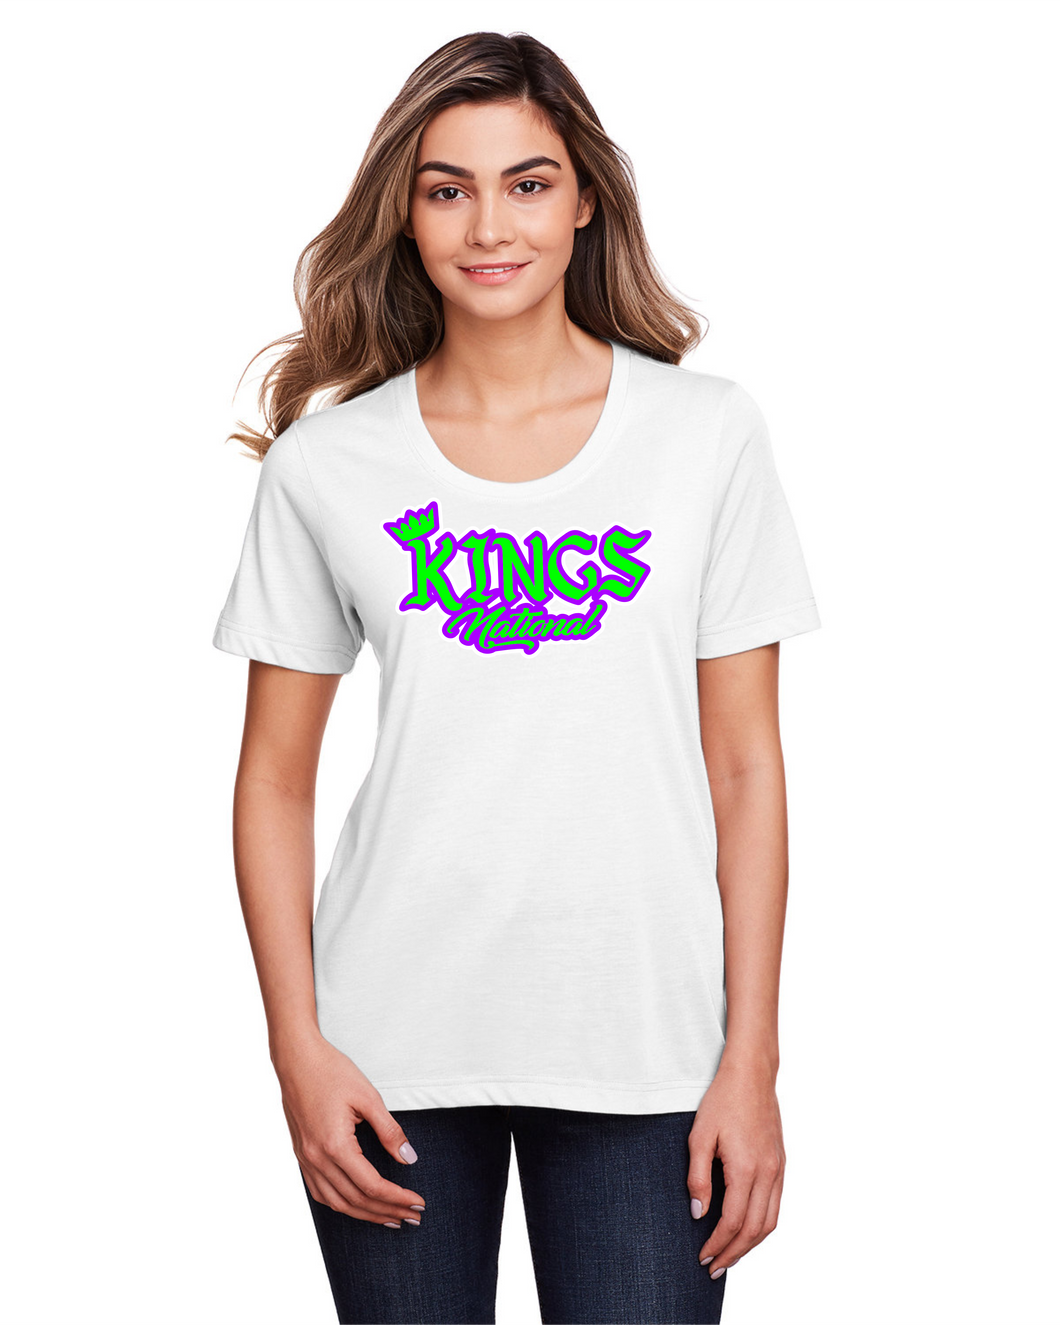 ATL-KINGS-631-11 - Core 365 Adult Fusion ChromaSoft Performance Short Sleeve T-Shirt - Kings National Logo